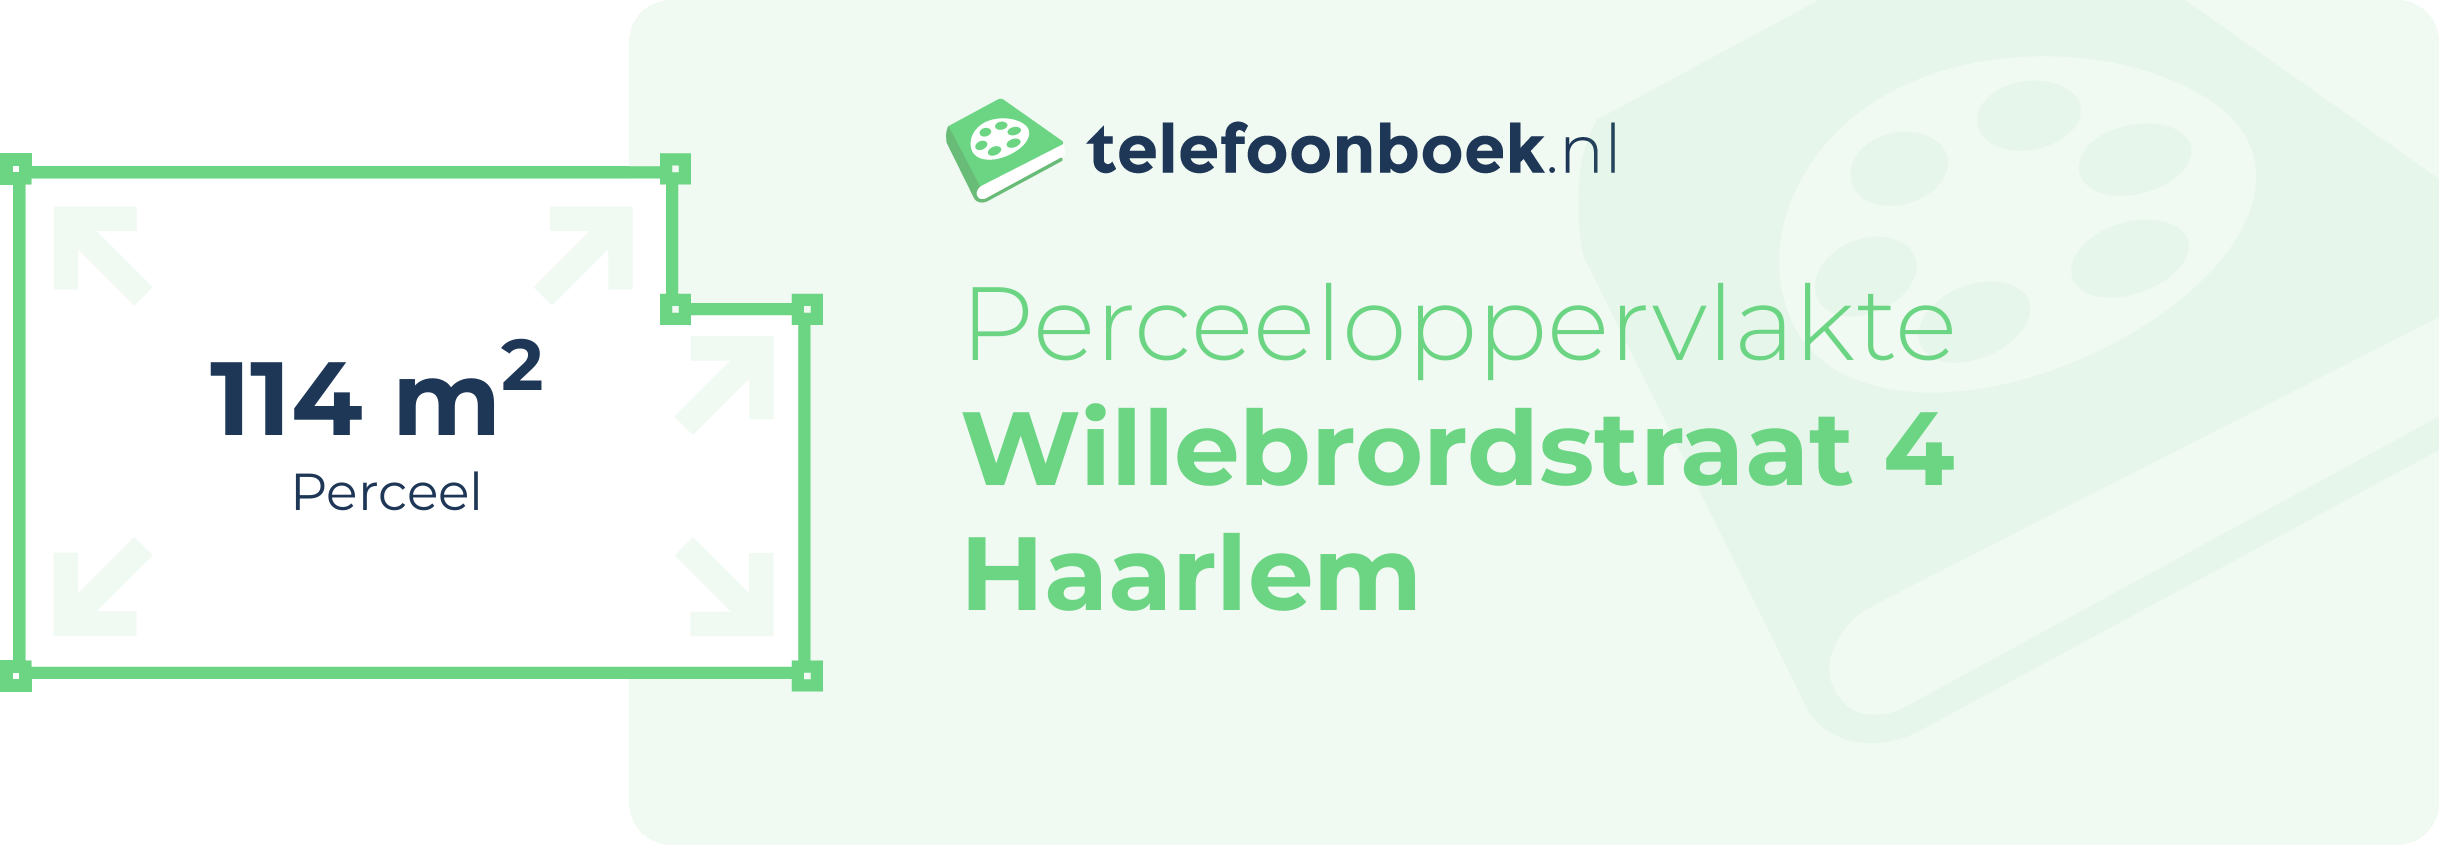 Perceeloppervlakte Willebrordstraat 4 Haarlem